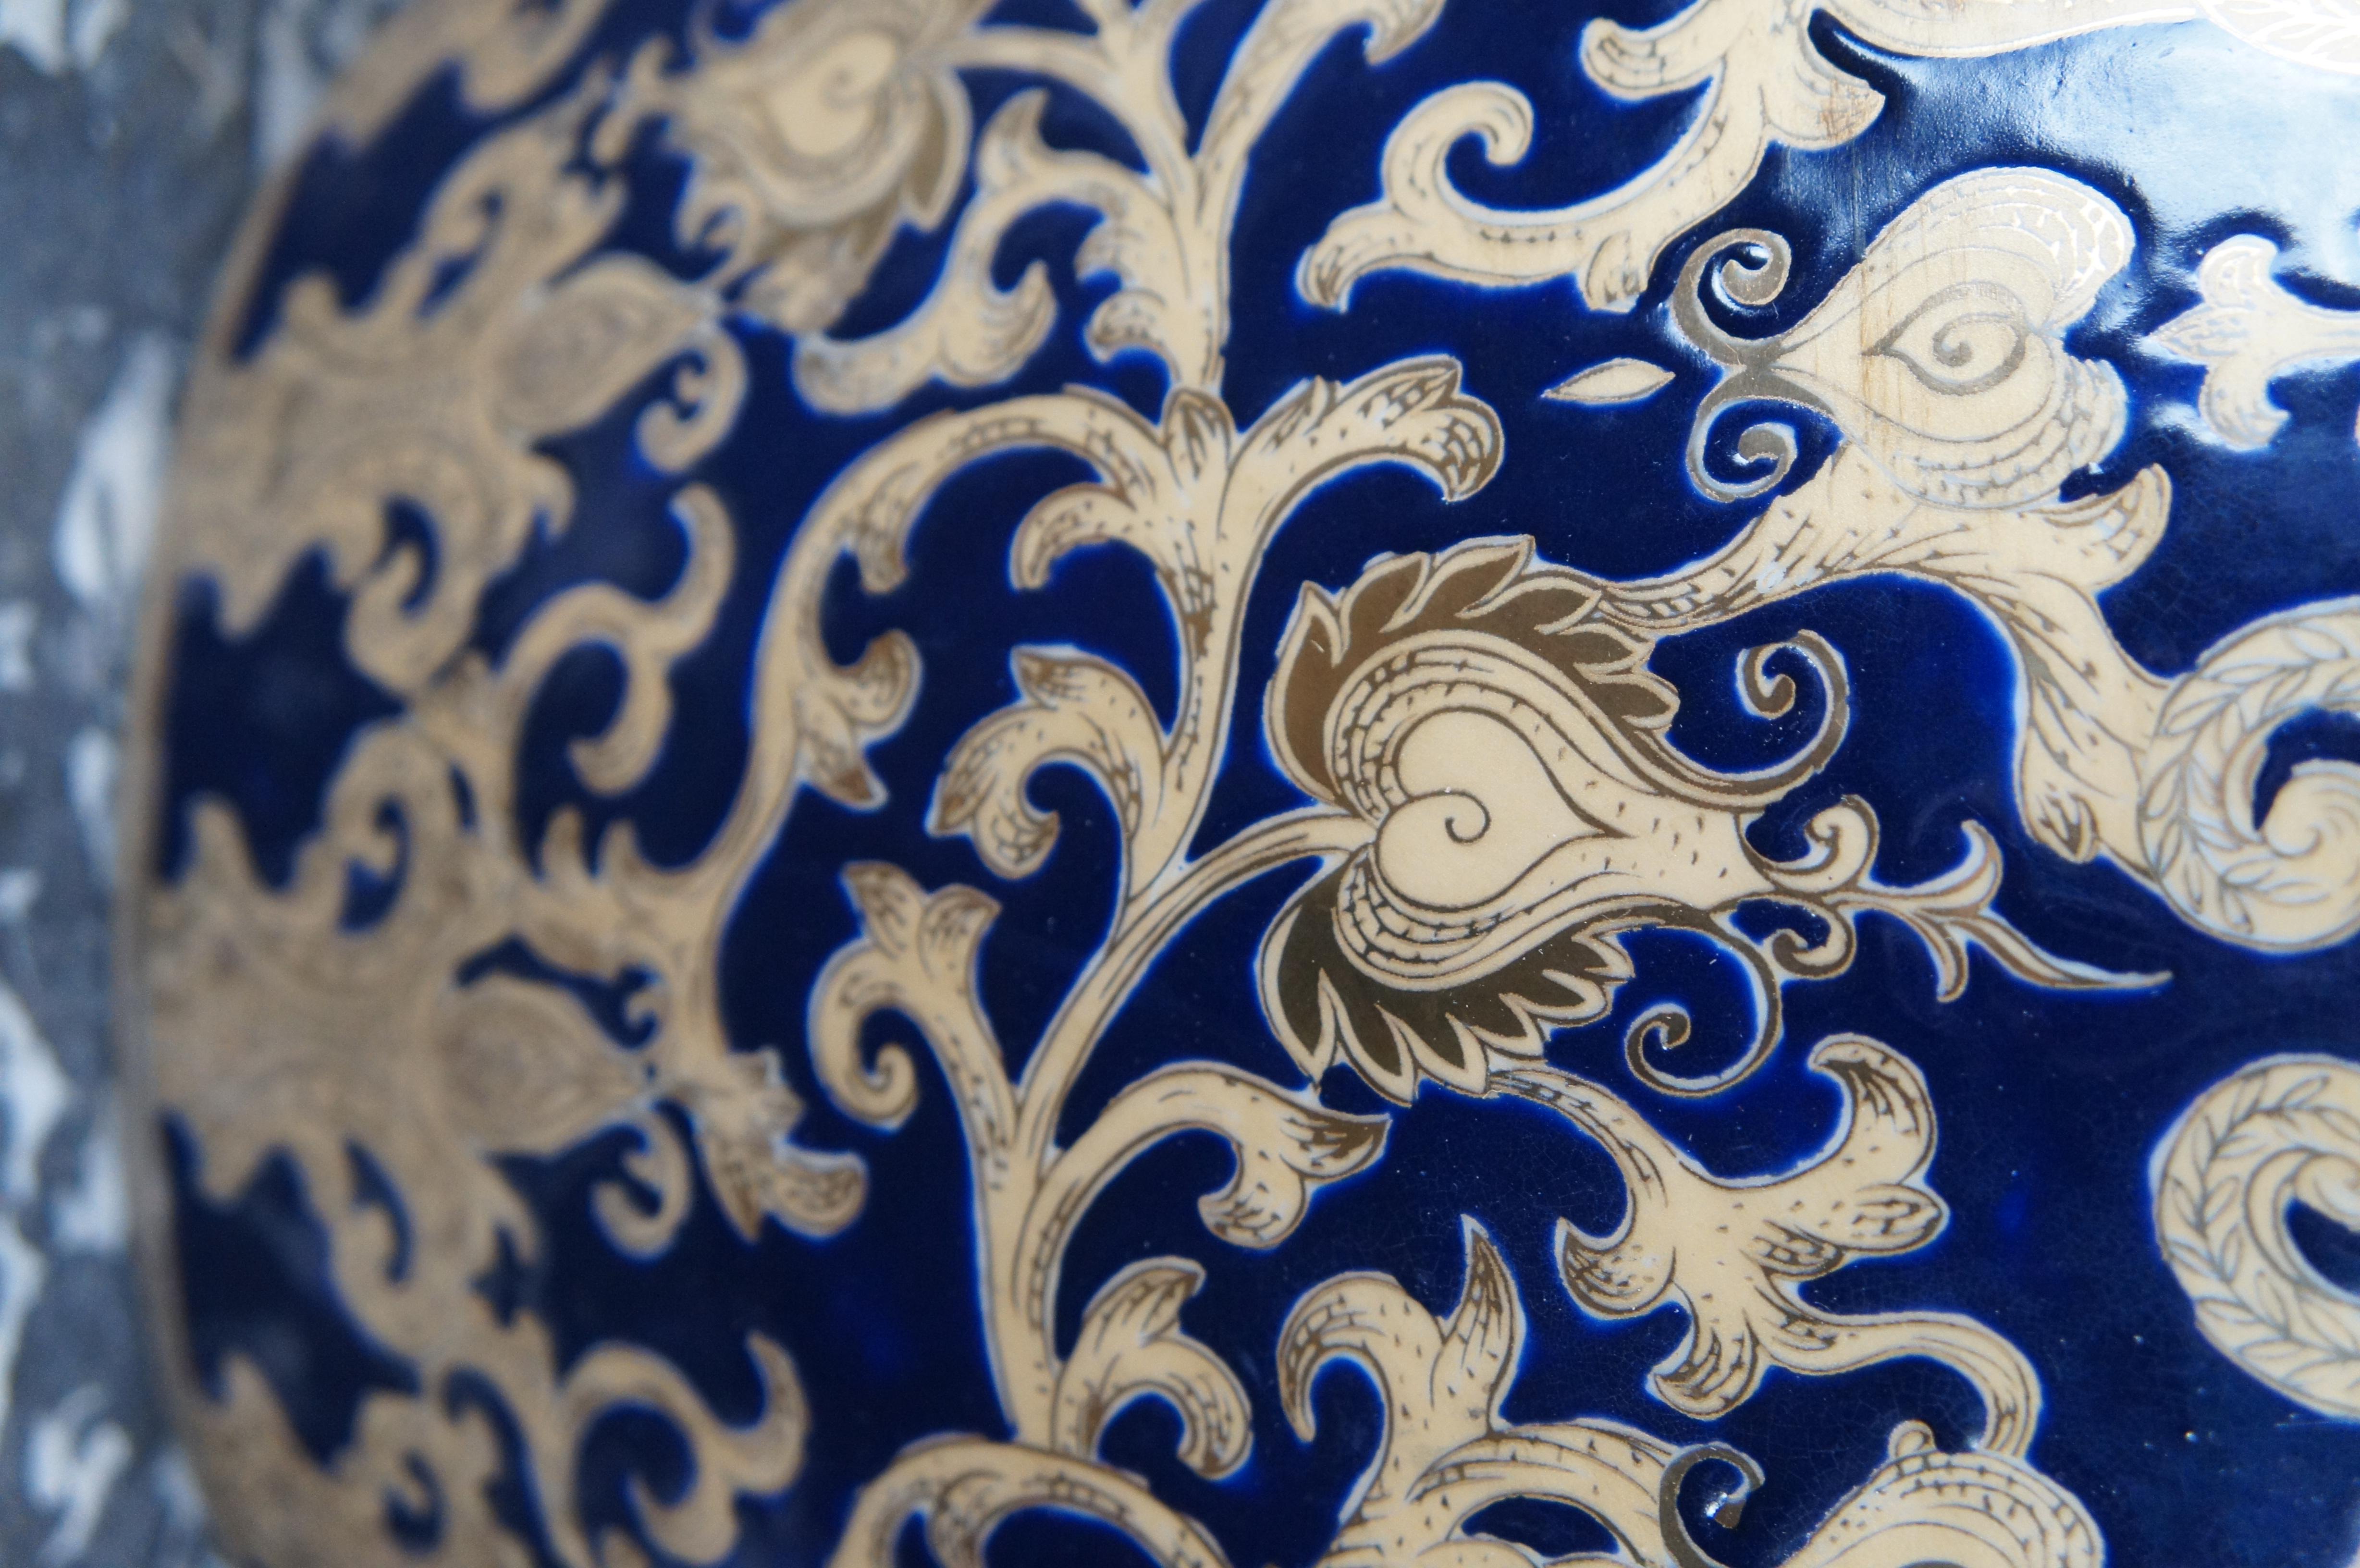 Chinese Porcelain Blue & 24 Karet Gold Enameled Koi Fish Bowl Planter Jardiniere 2